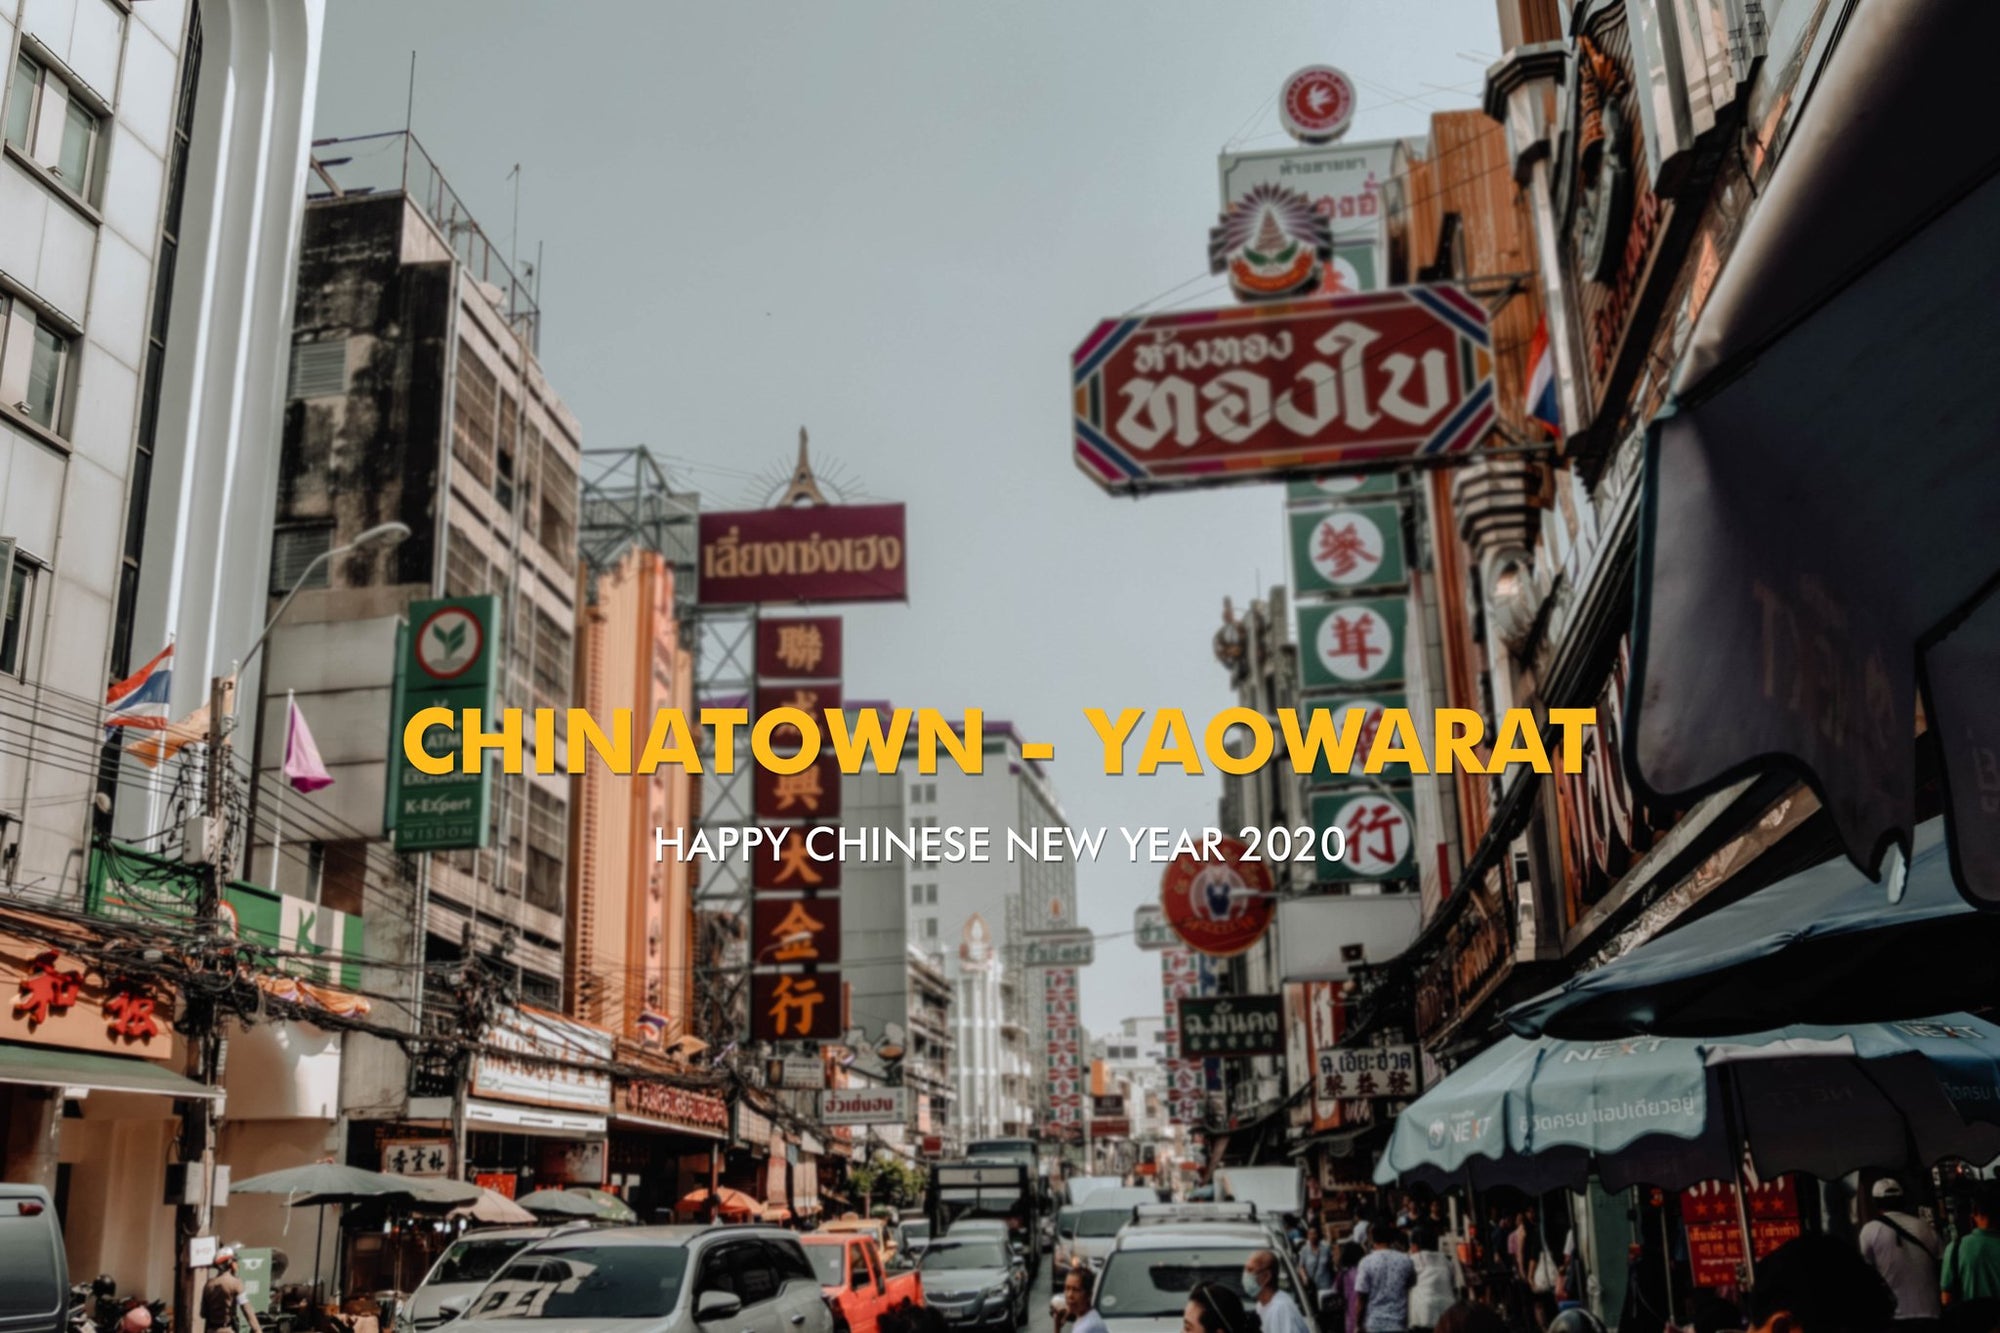 Yaowarat - The China Town of Thailand